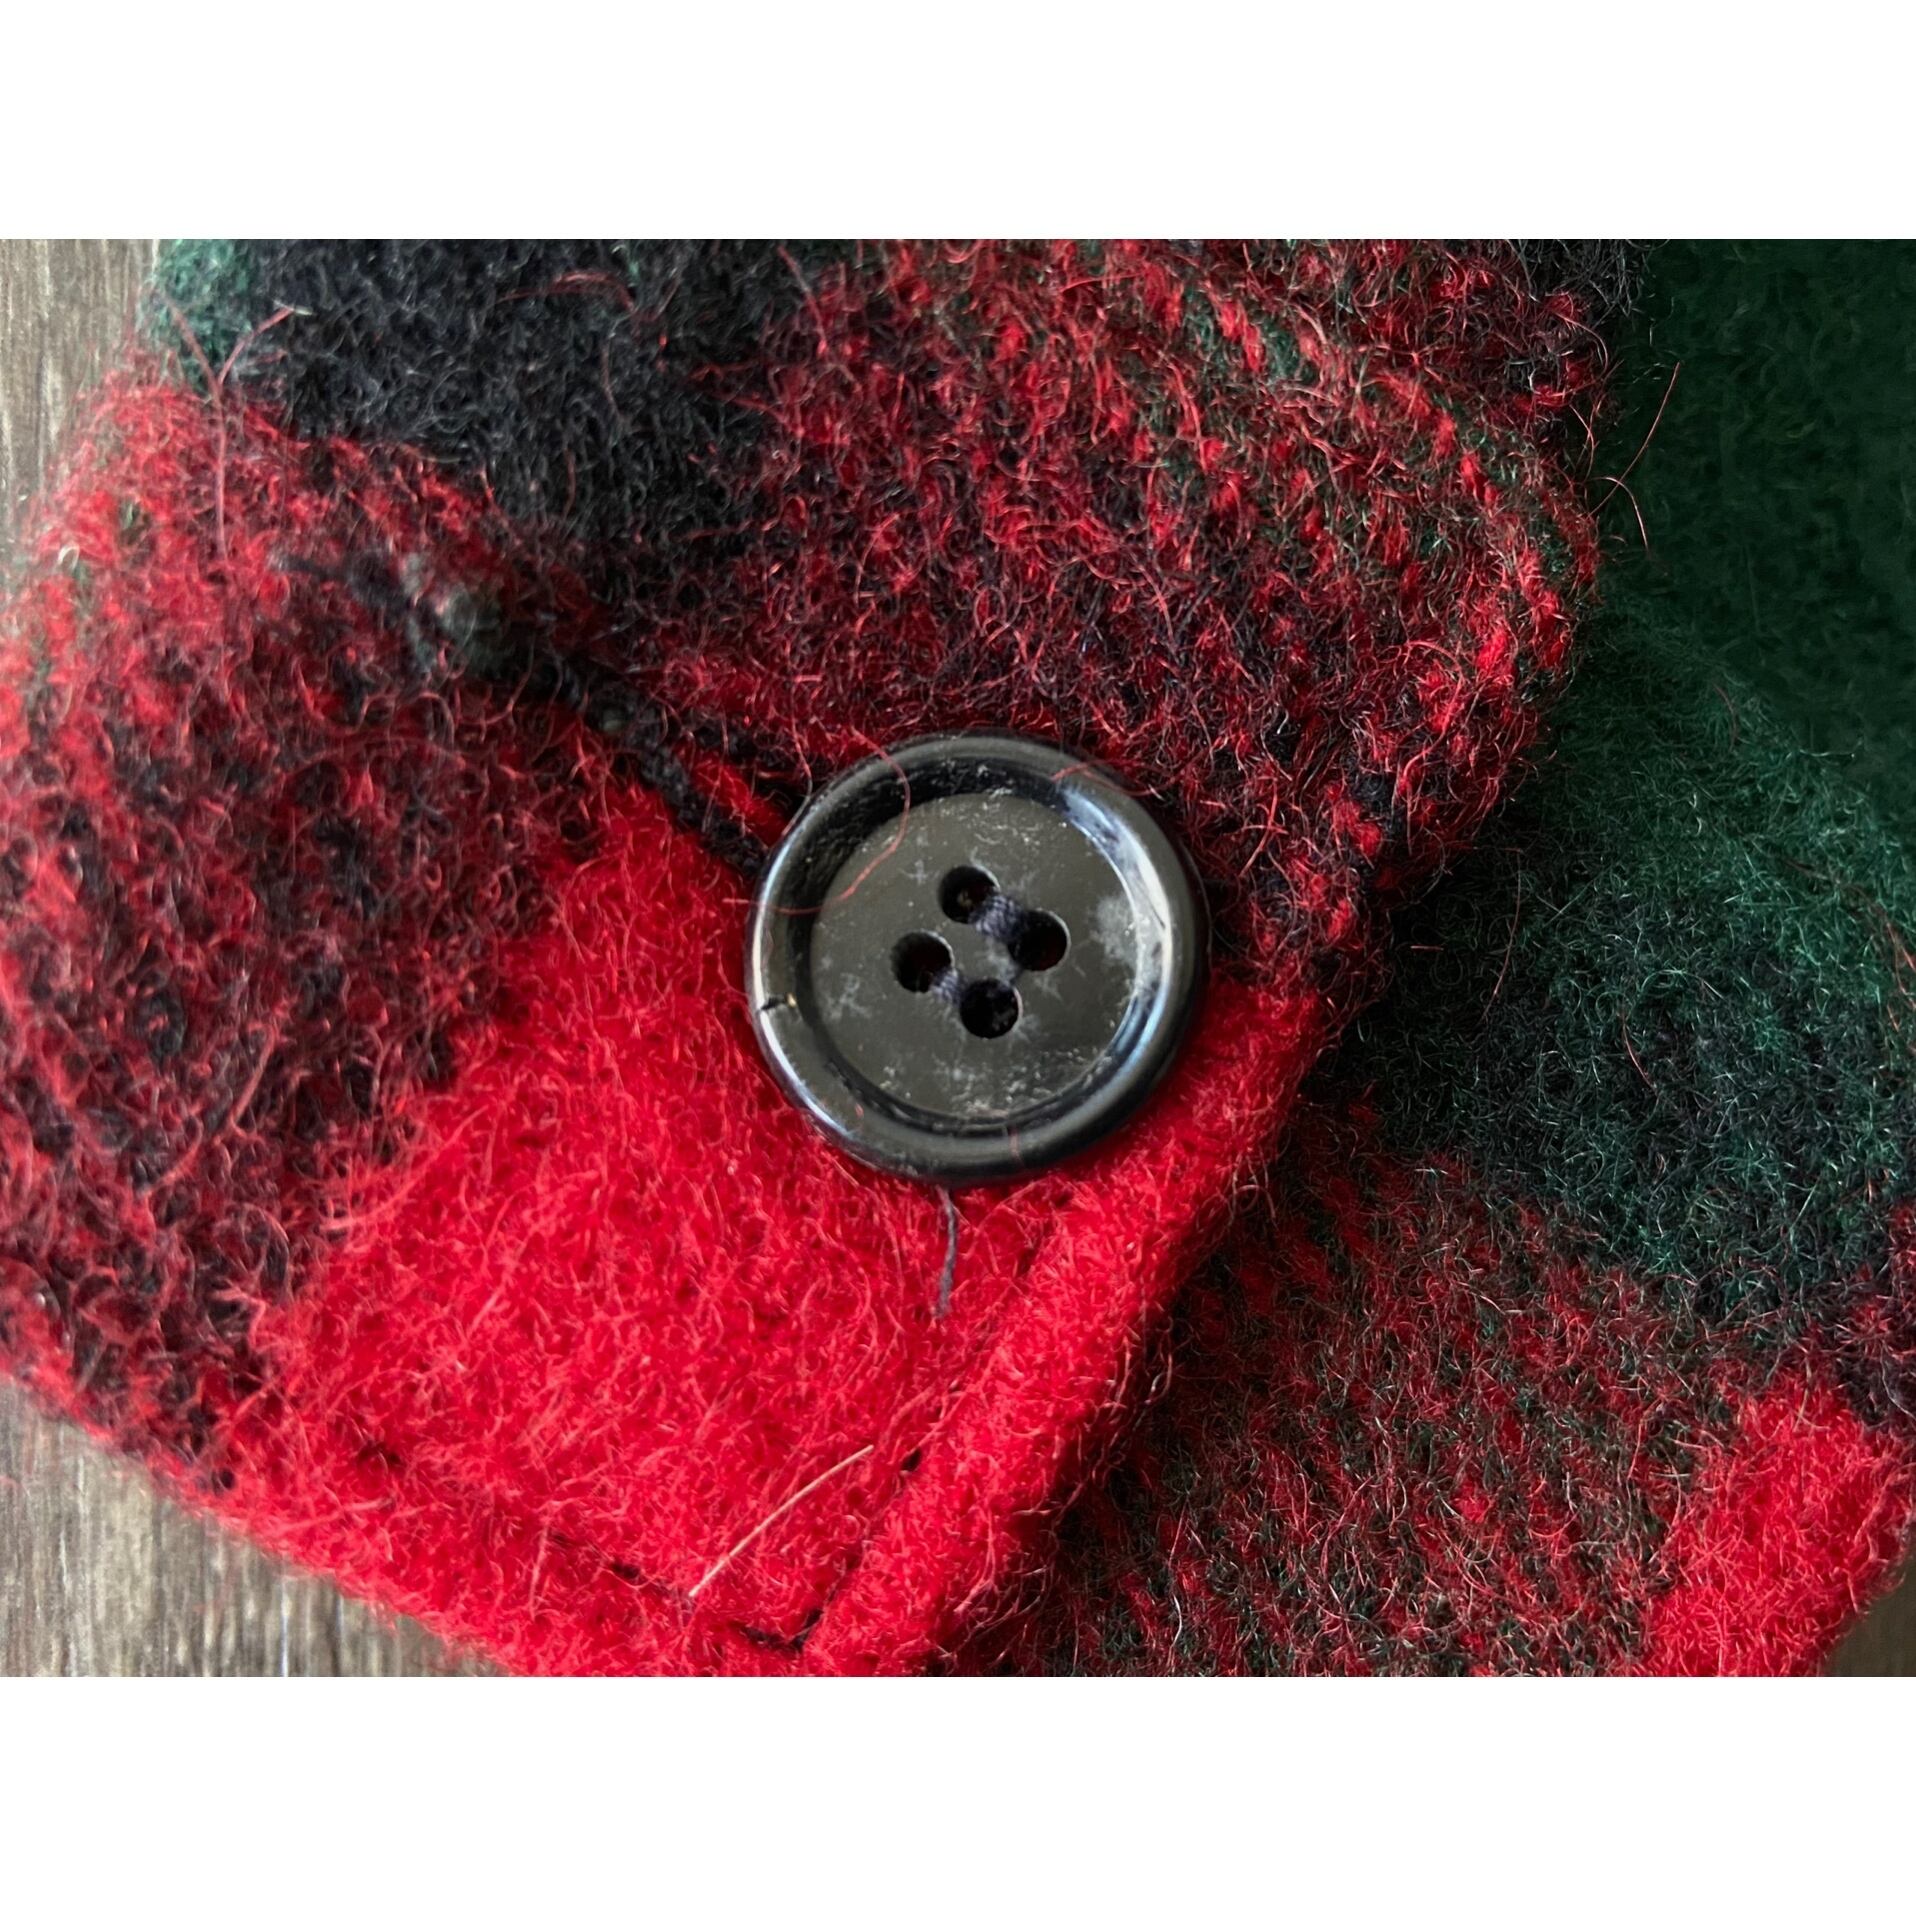 60s-70s “BSA” vintage plaid pattern wool jac-shirt red × green woolrich  ボーイスカウト ウールジャケット シャツジャケット ウールリッチ ヴィンテージ